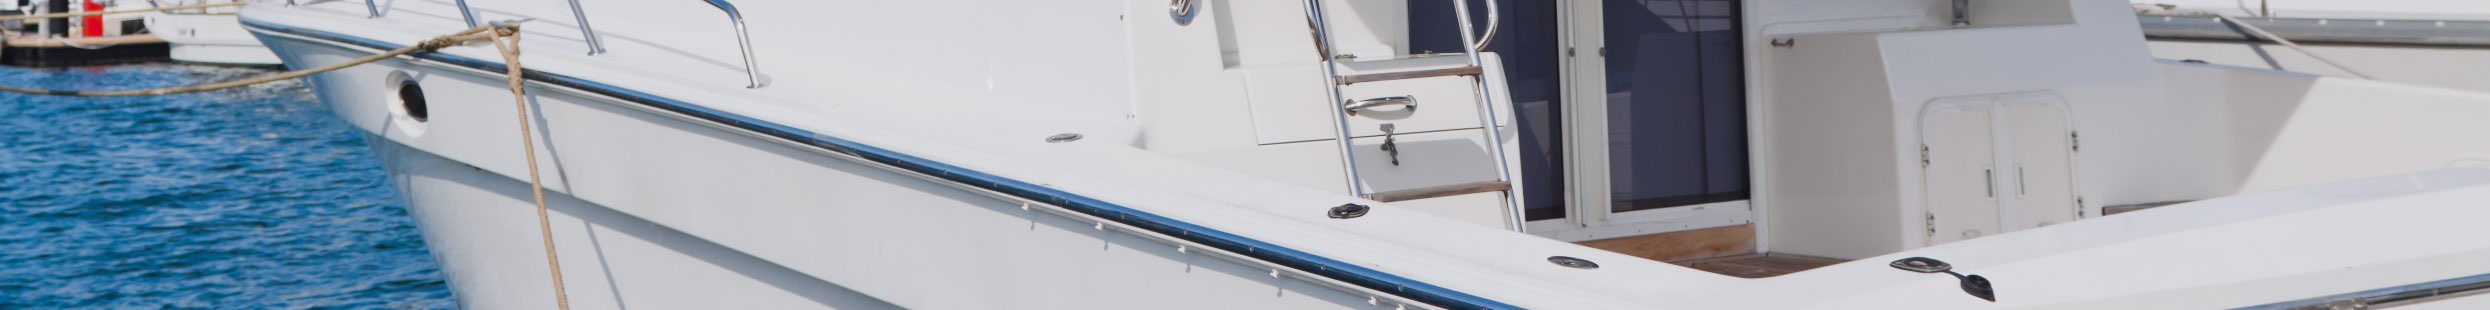 BOAT ROD HOLDER Seat Nylon Plastic Outdoor Yacht Fishing Pole